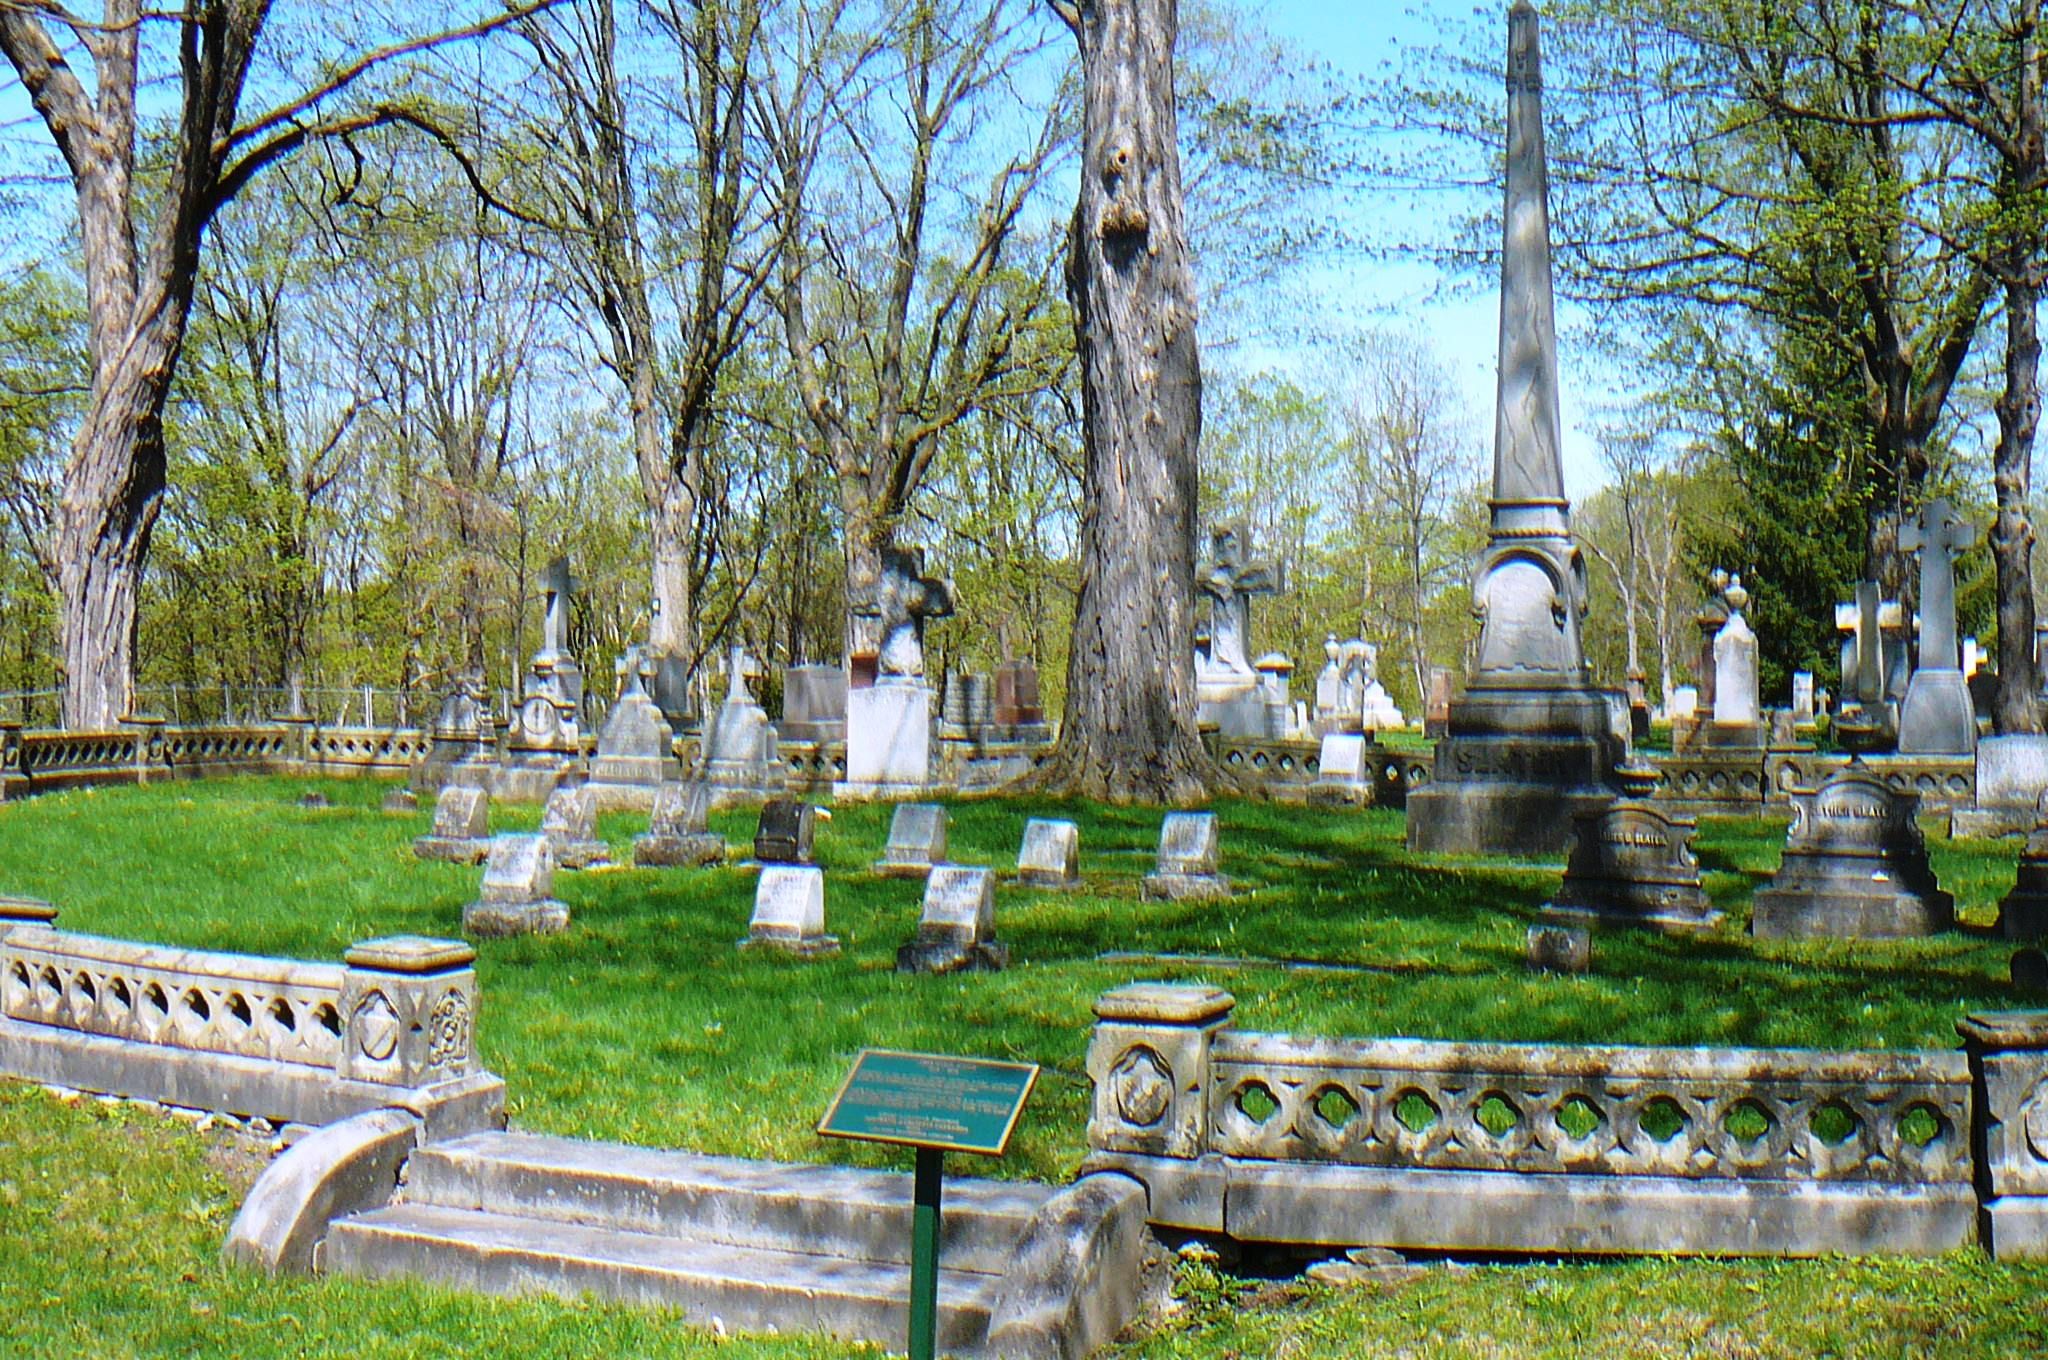 Sherwood grave